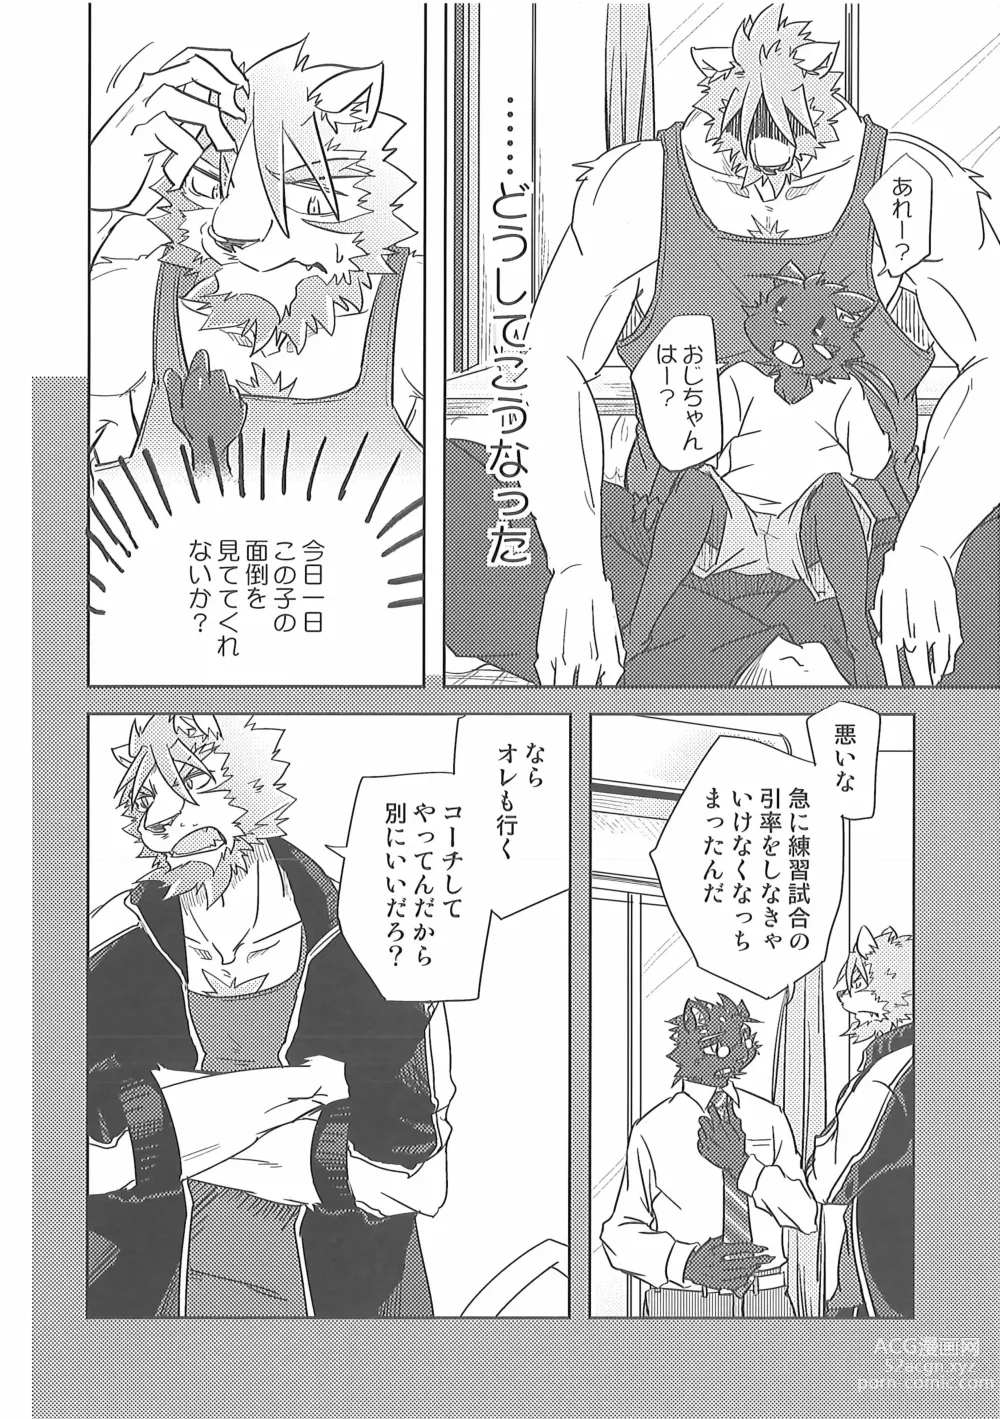 Page 5 of doujinshi Crazy Waltz